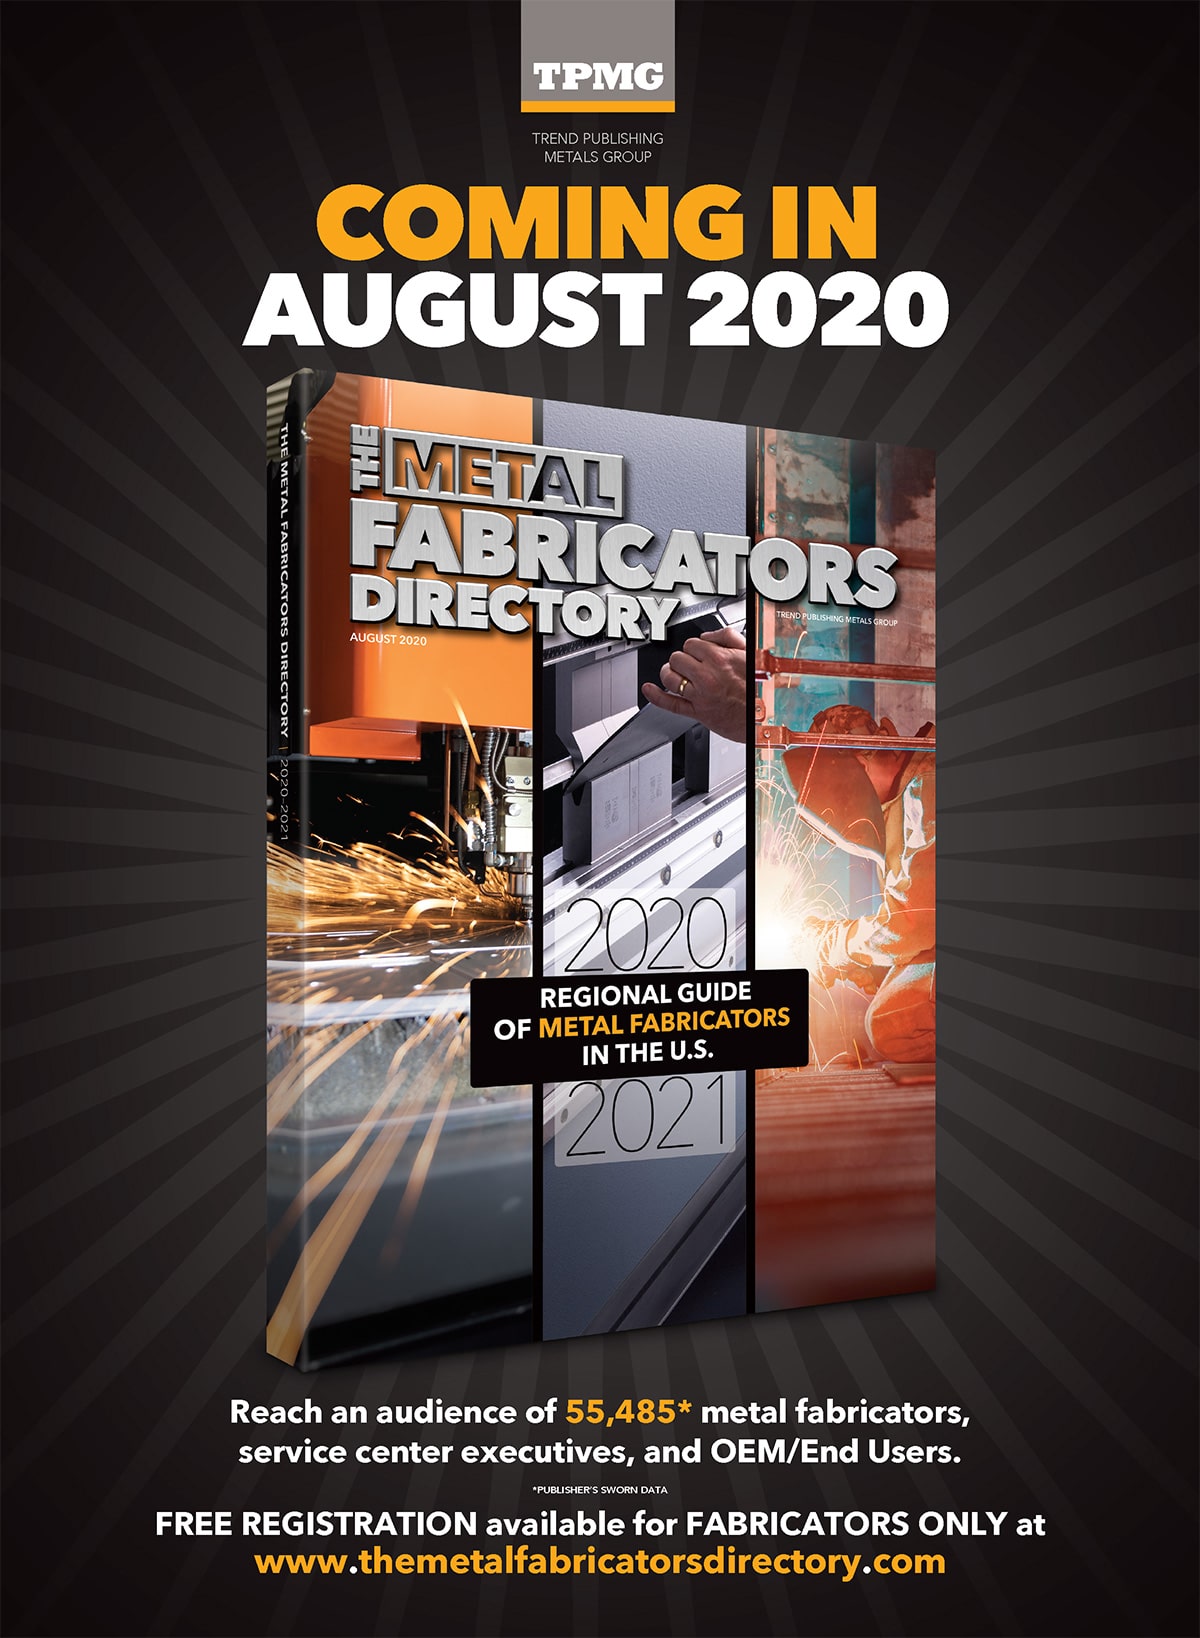 TPMG "The Metal Fabricators Directory" Book Advertisement